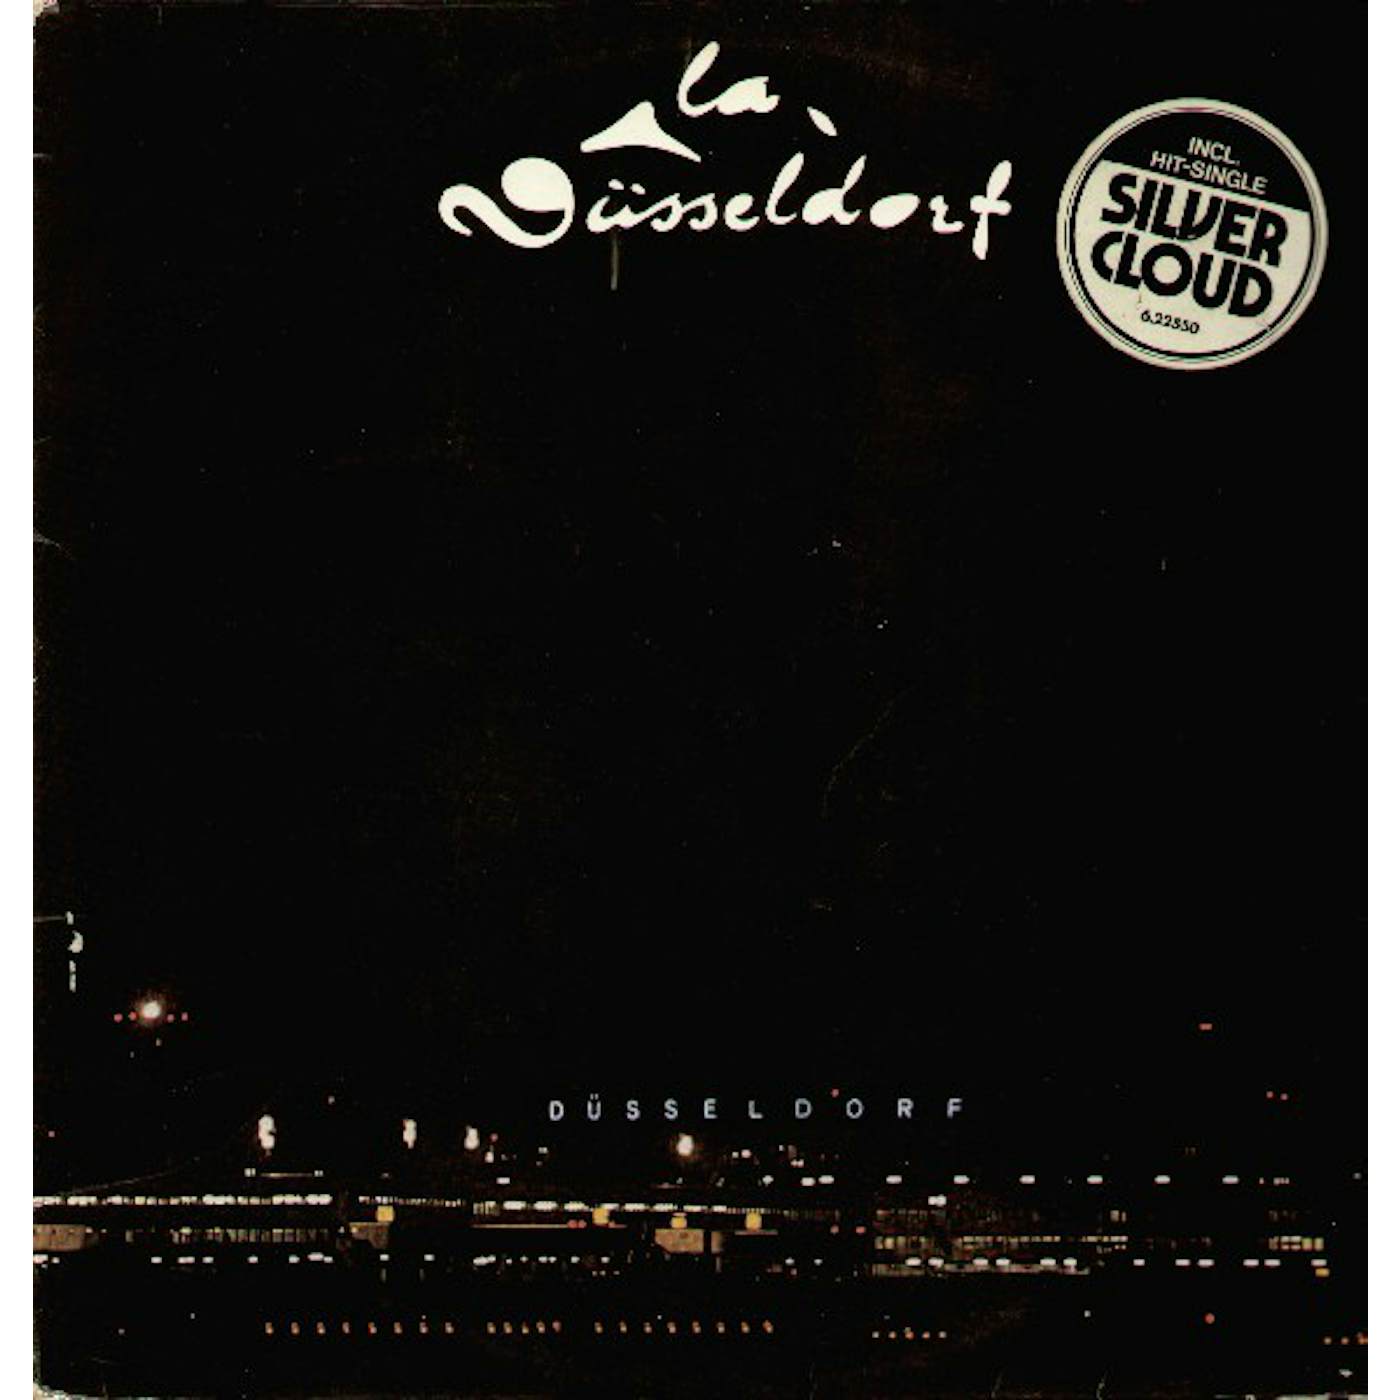 Silver Cloud/La Düsseldorf Vinyl Record